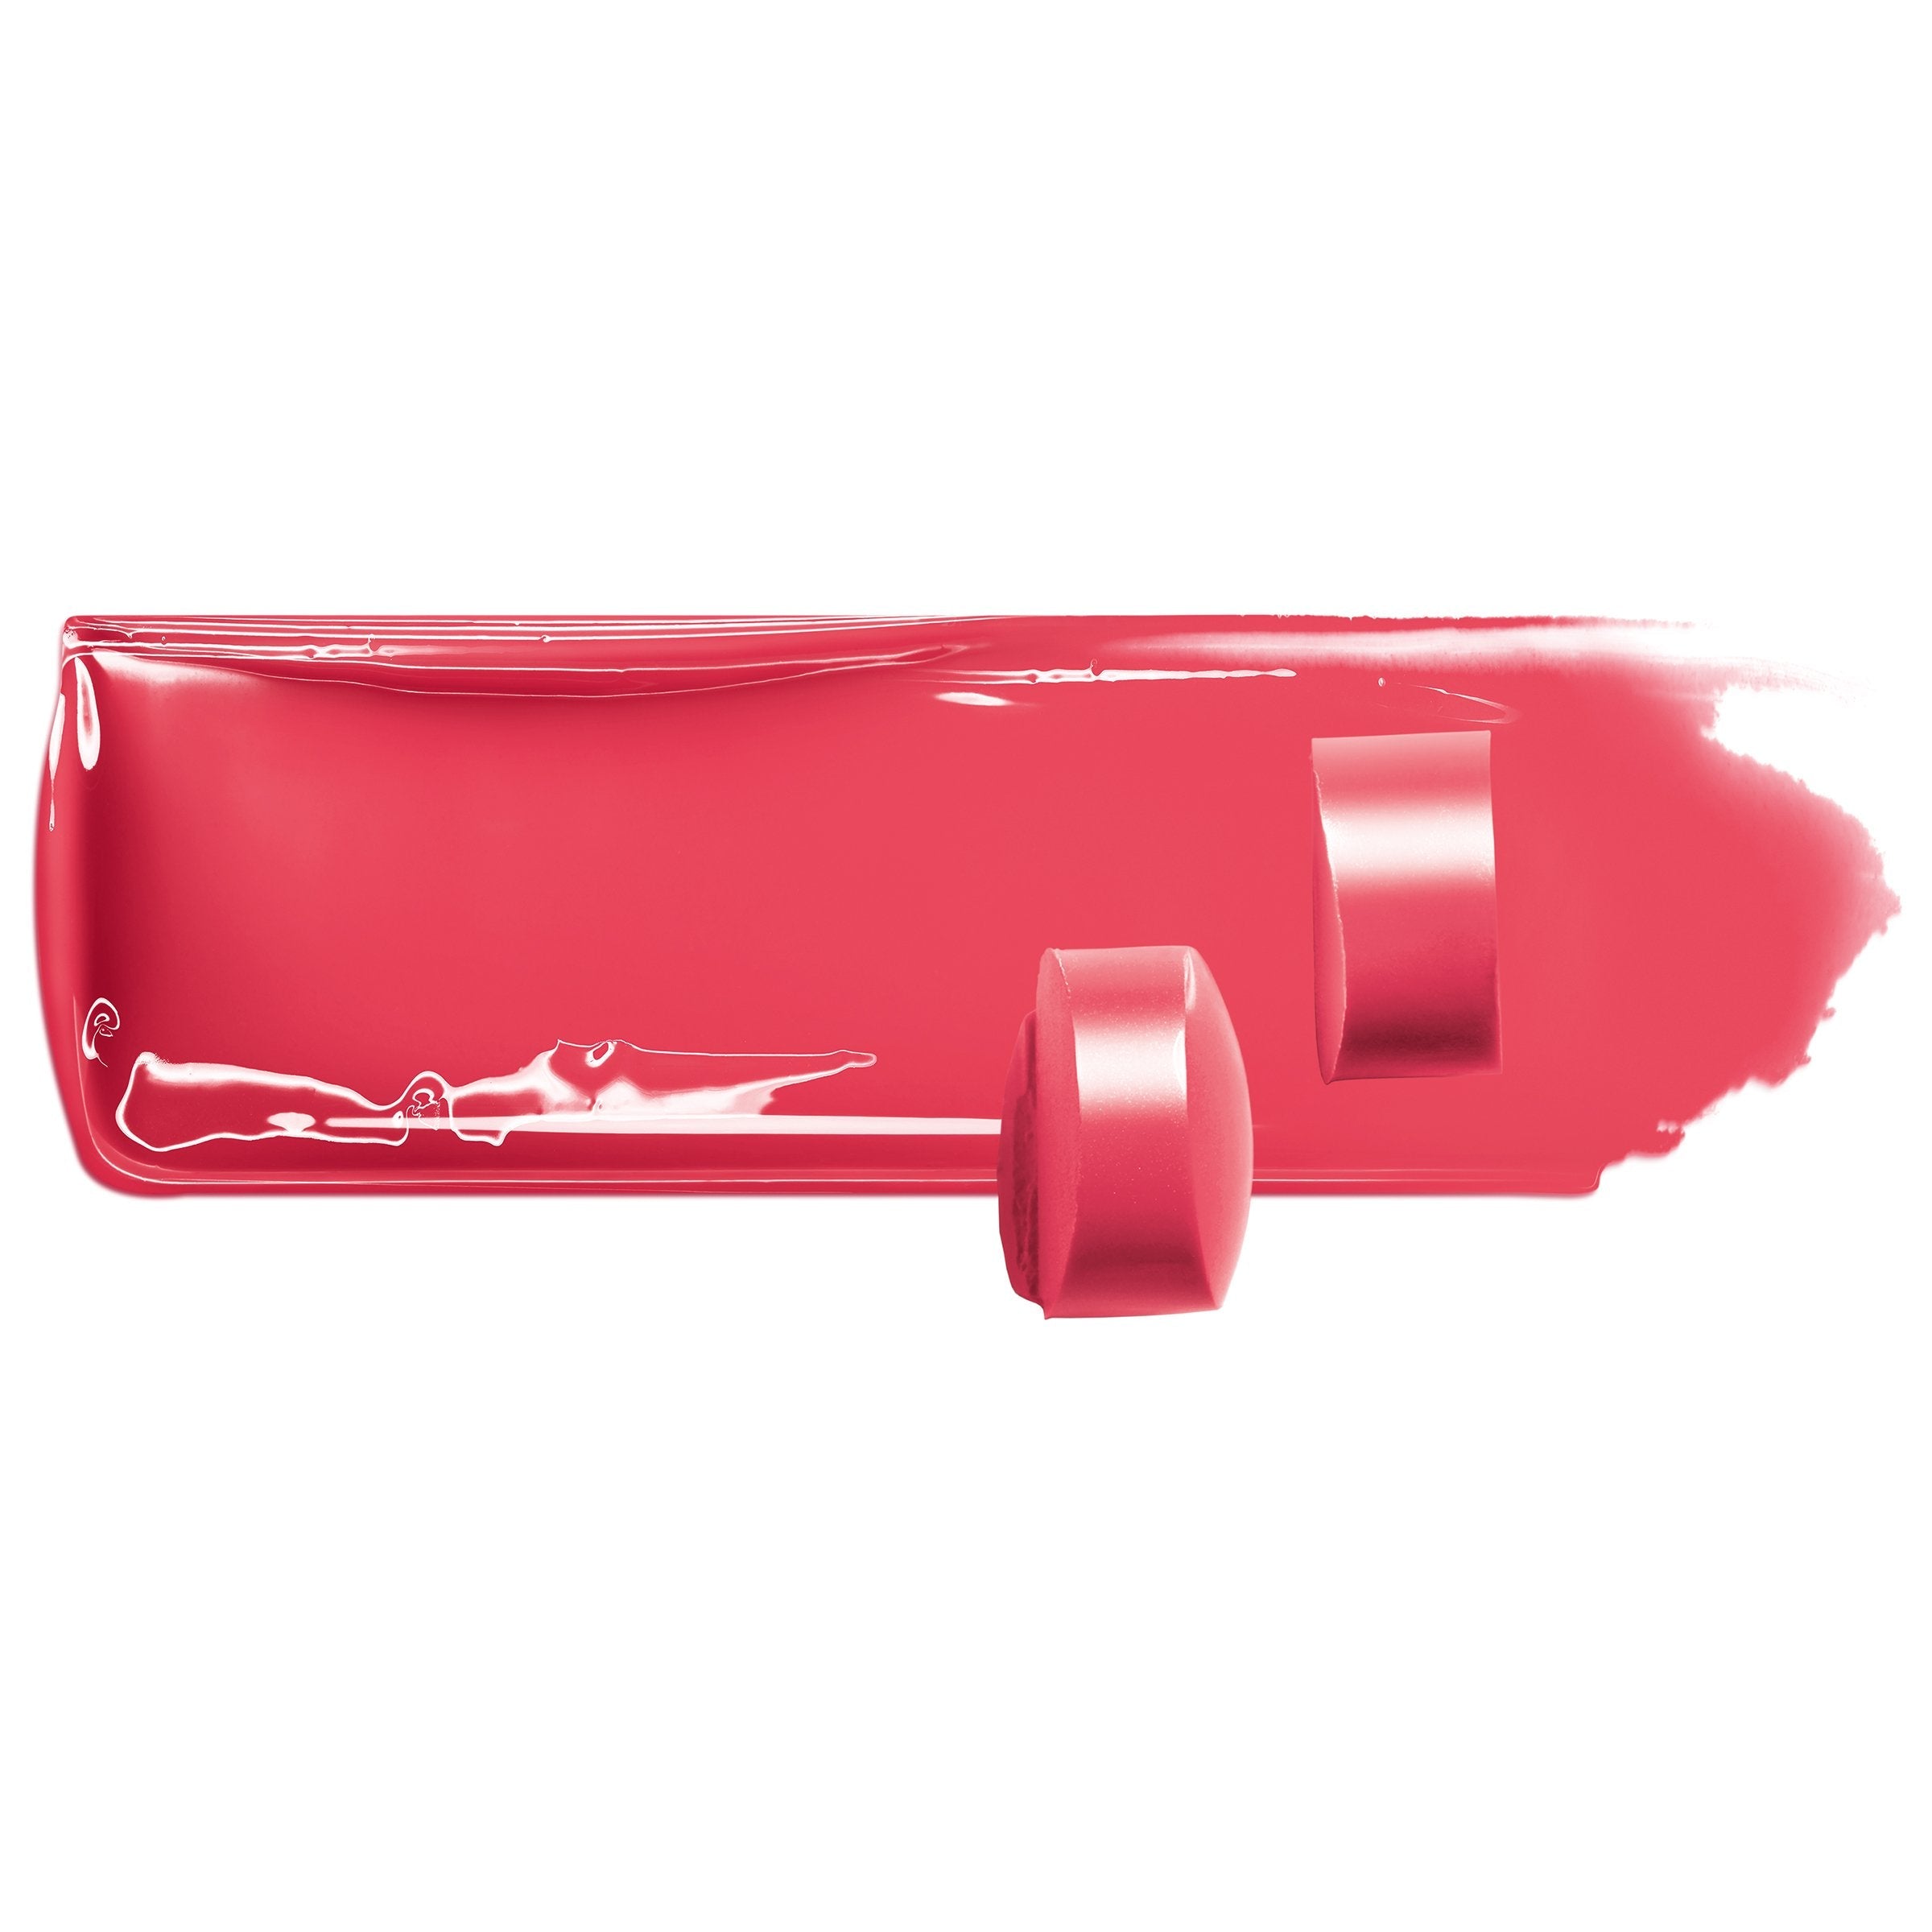 L'Oreal Paris Colour Riche Shine Glossy Ultra Rich Lipstick, Polished Tango, 0.1 oz.-CaribOnline